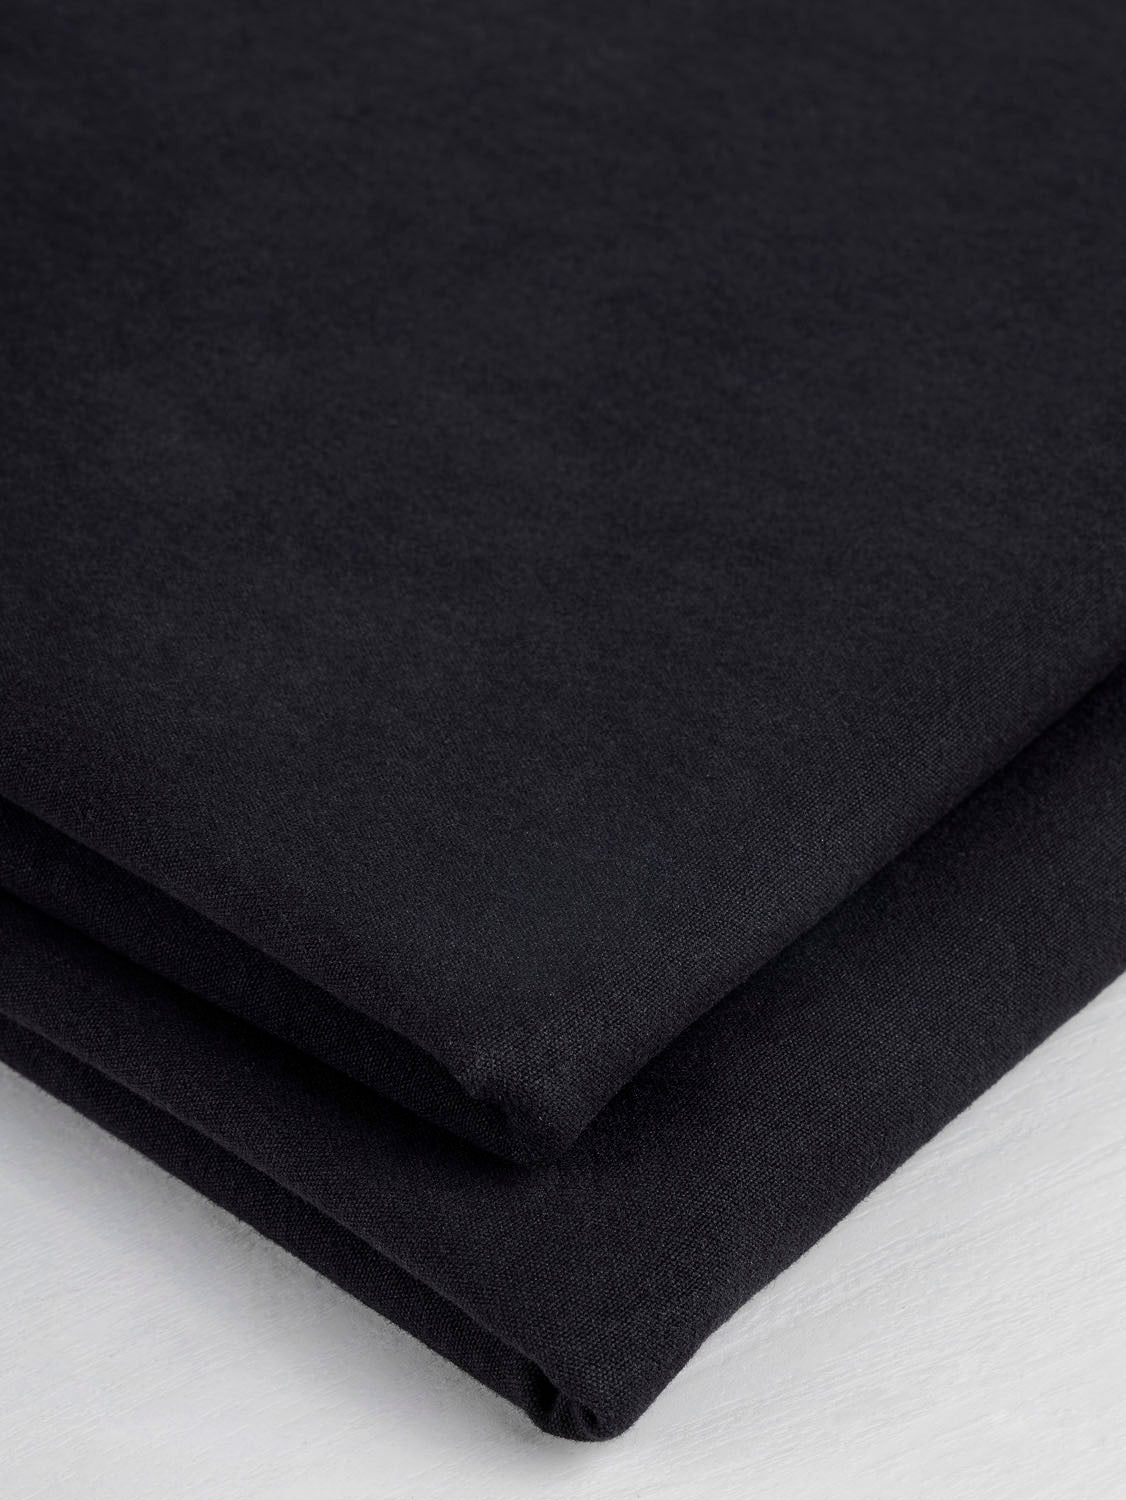 Black Felt Fabric